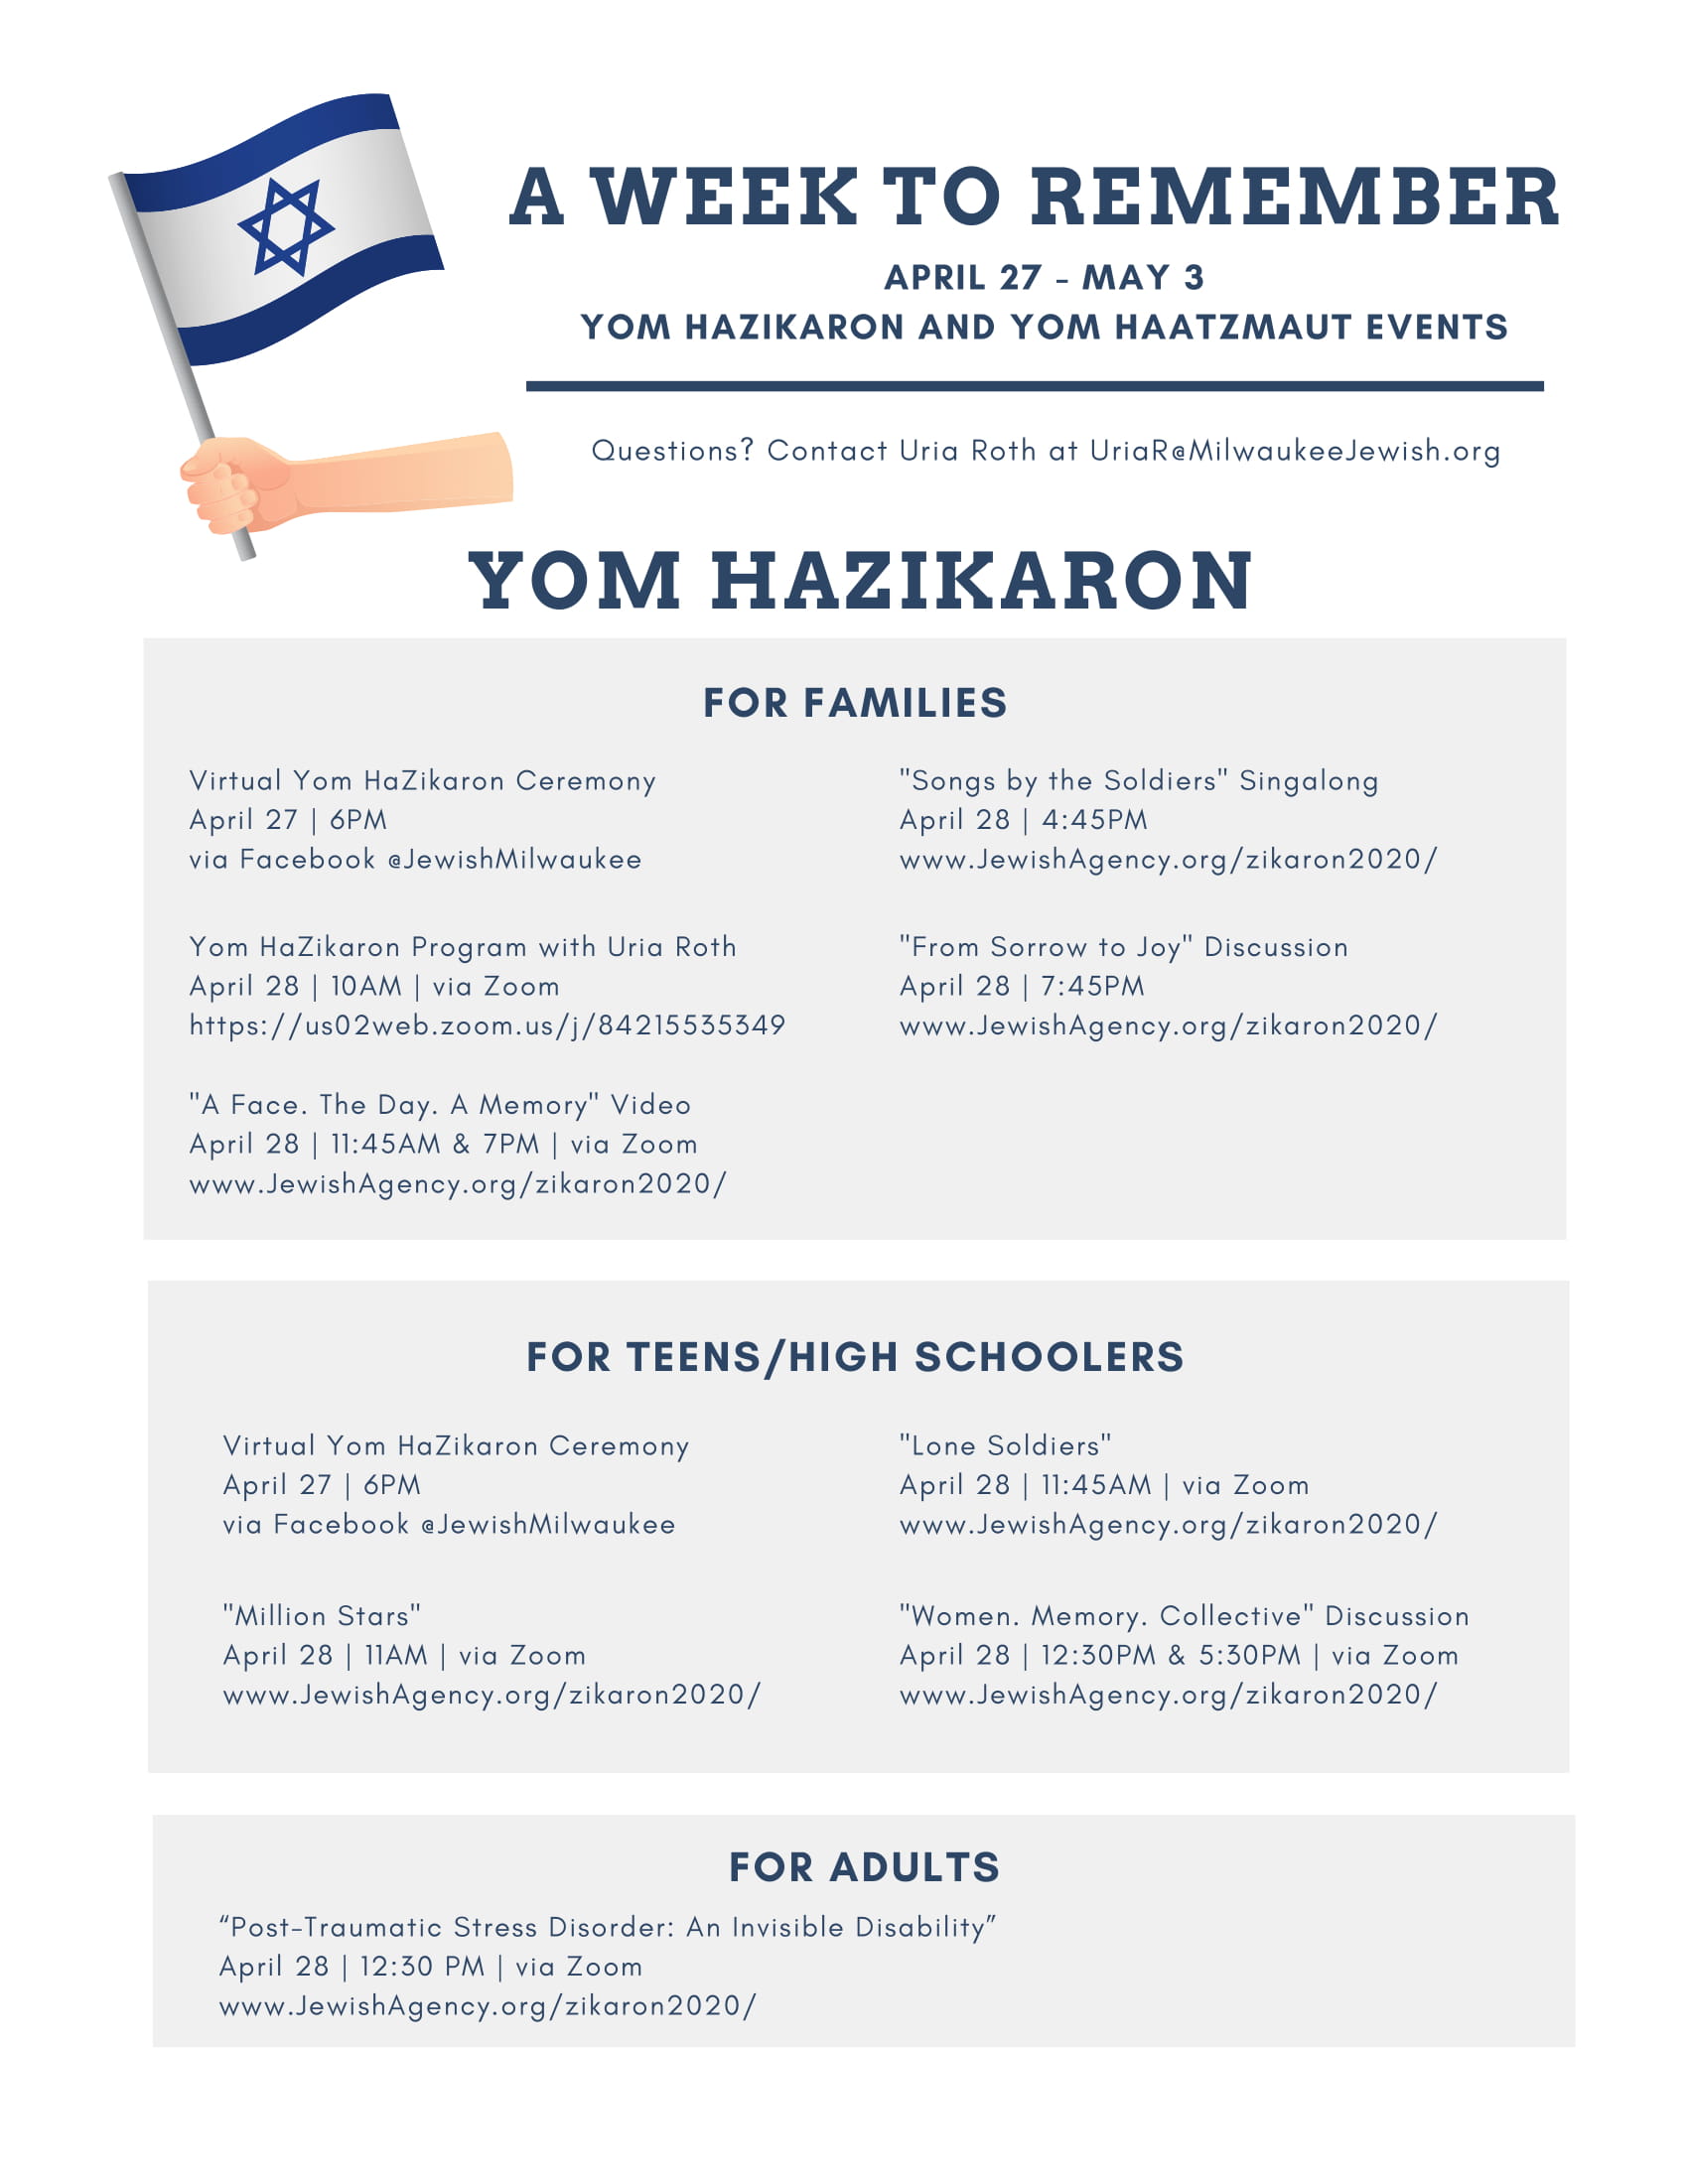 A week to remember Yom Hazik and Haatz-1